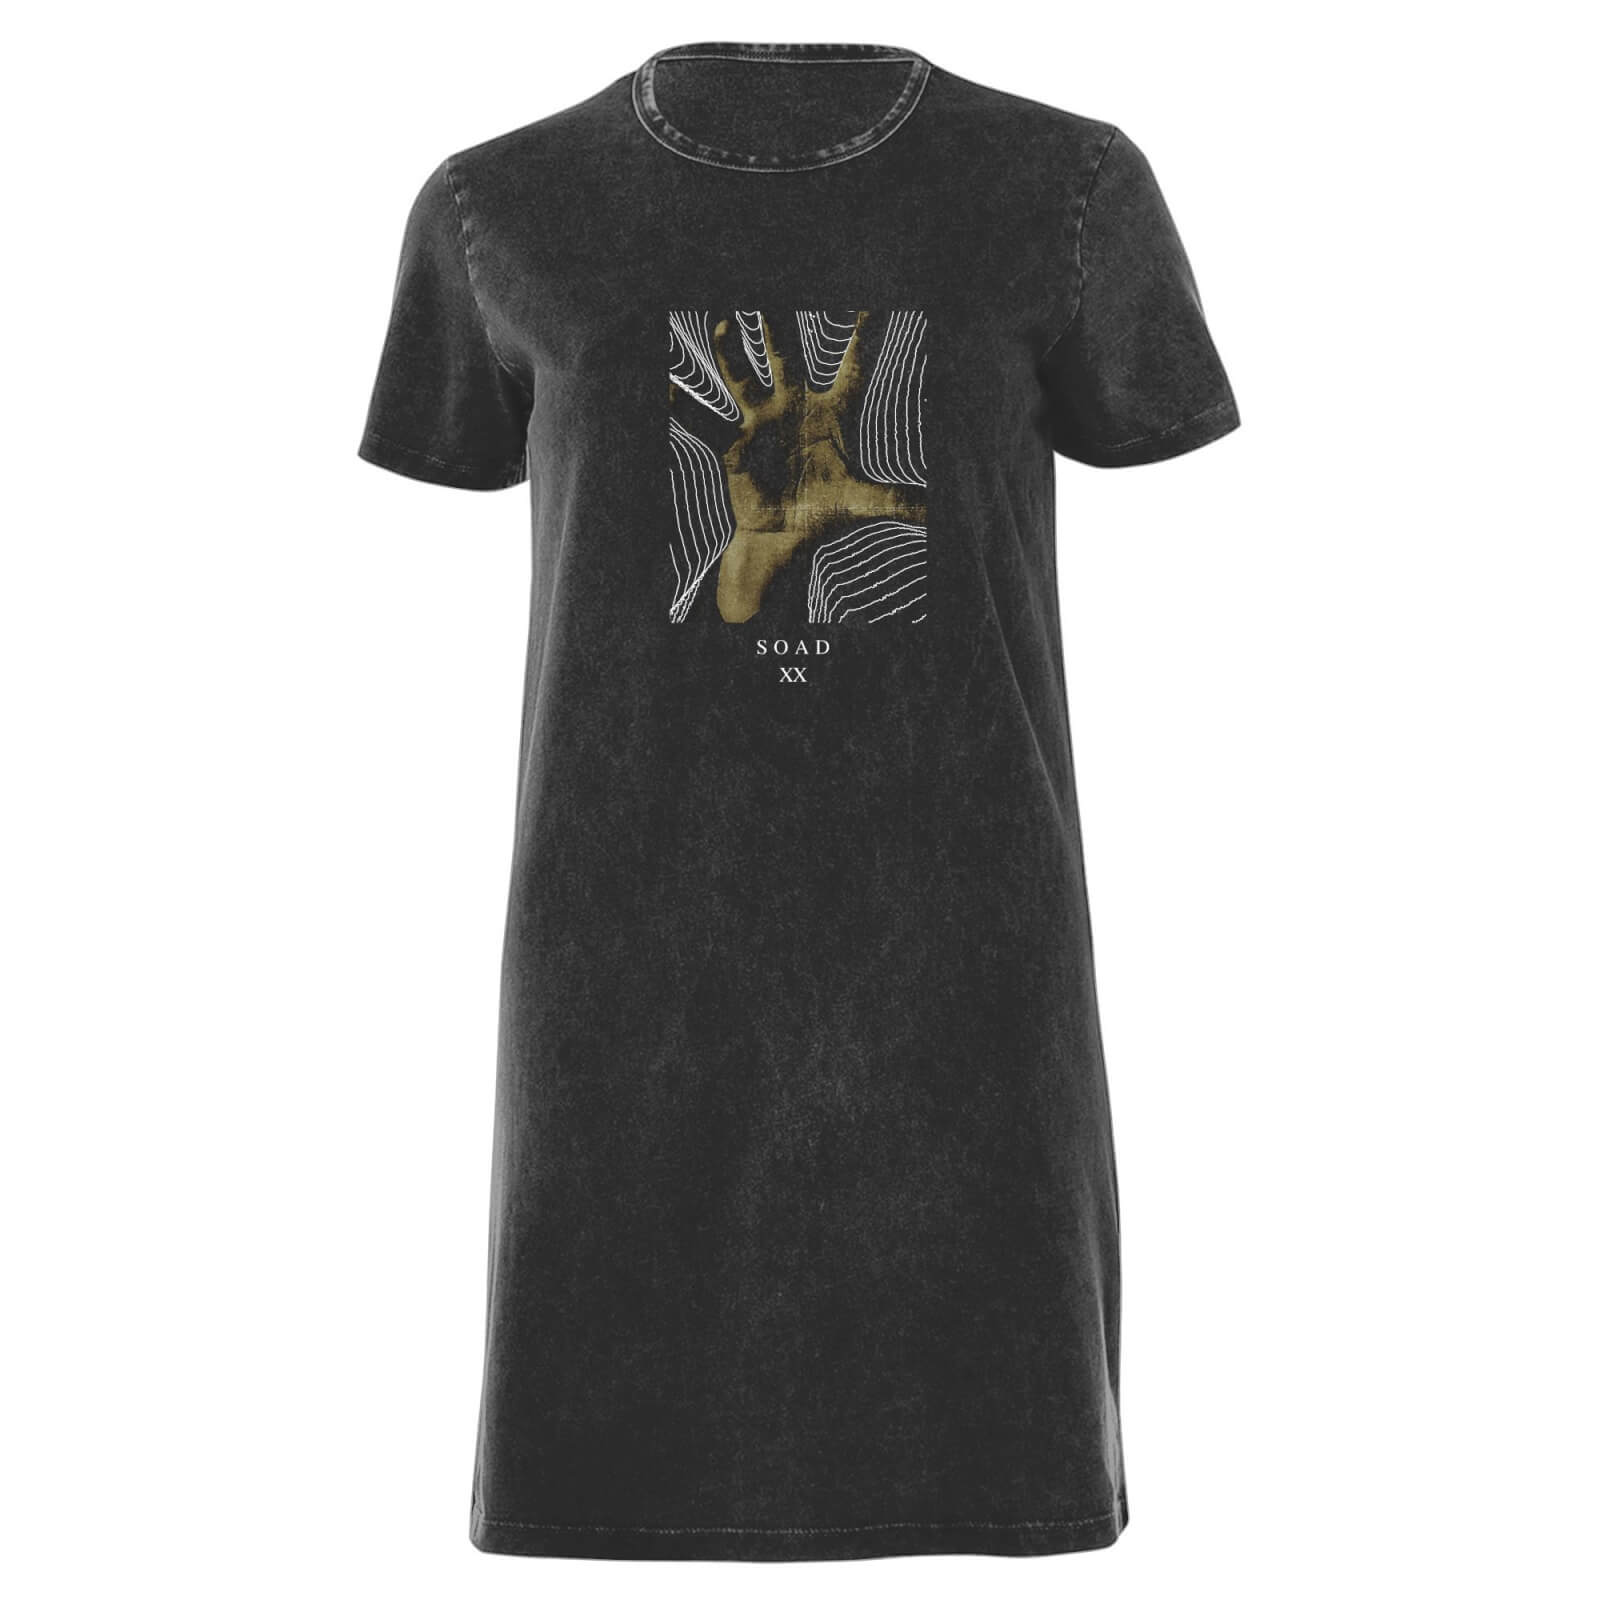 System Of A Down Hand Women's T-Shirt Dress - Black Acid Wash - S